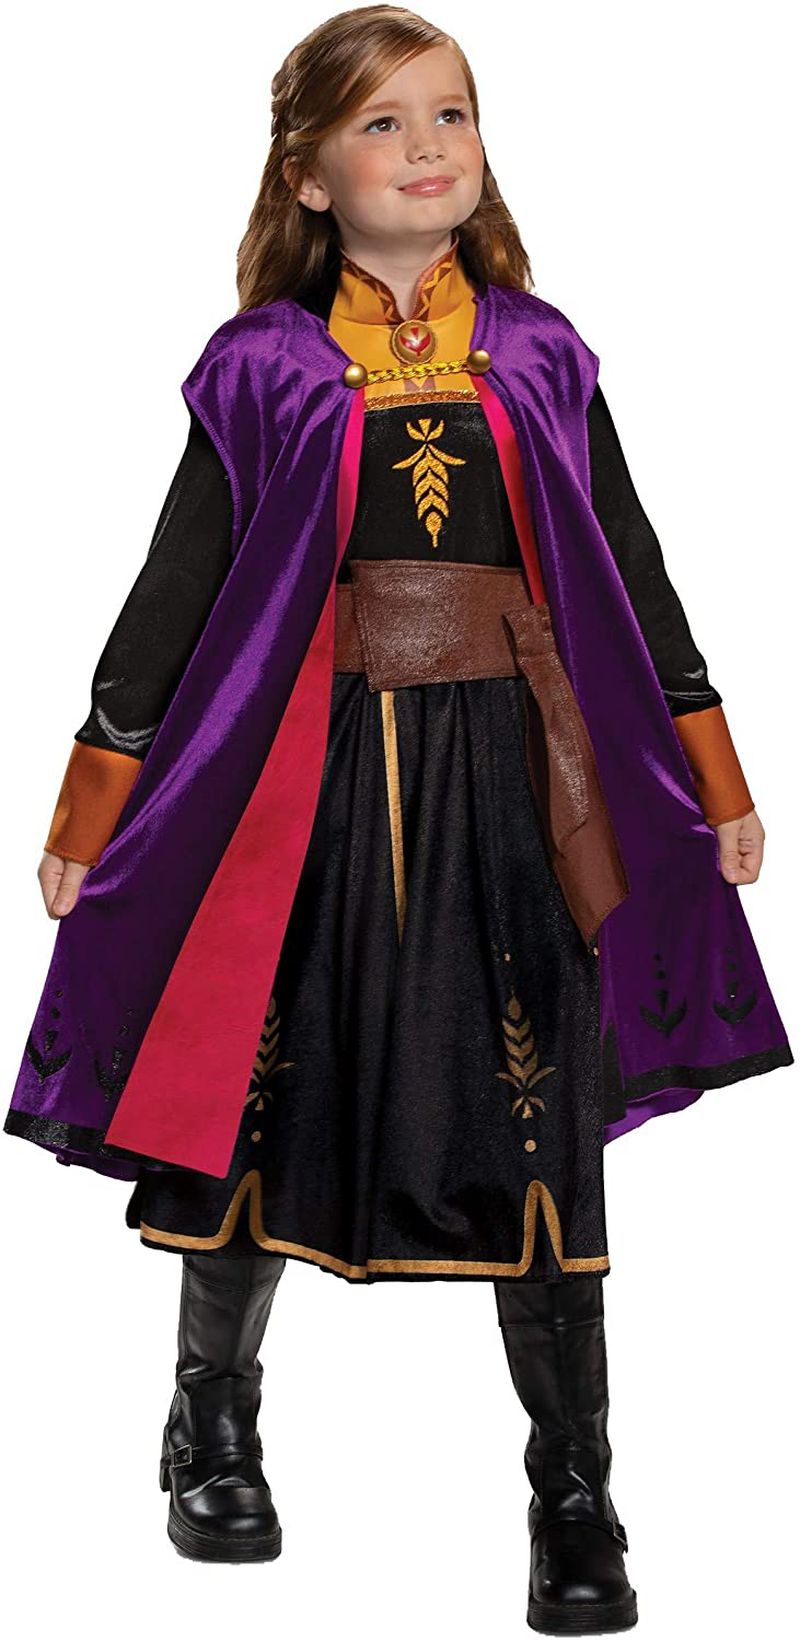 Disguise Disney Anna Frozen 2 Deluxe Girls' Halloween Costume Purple, 3T-4T Apparel & Accessories > Costumes & Accessories > Costumes Disguise Size 10/12  